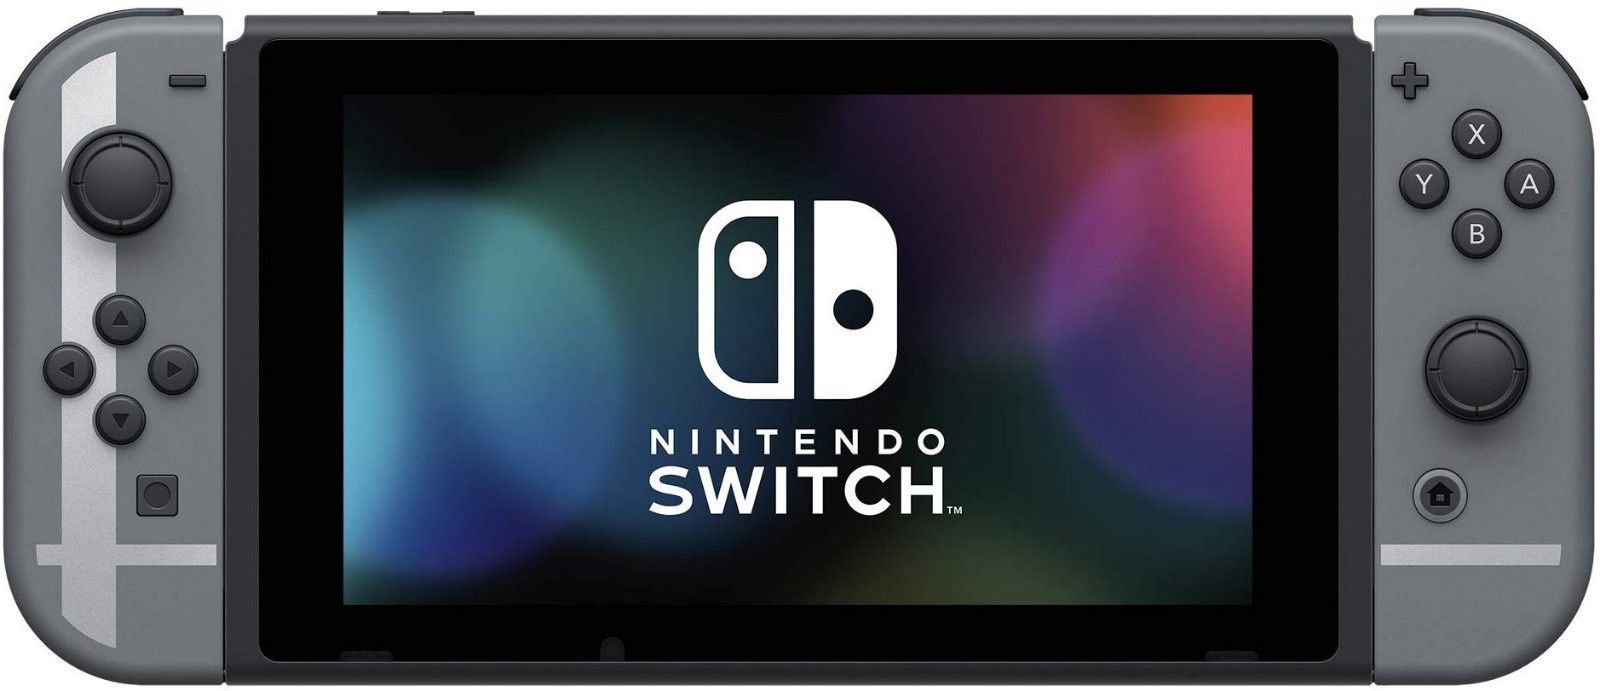 Nintendo Switch Super Smash Bros. Ultimate Edition - Switch